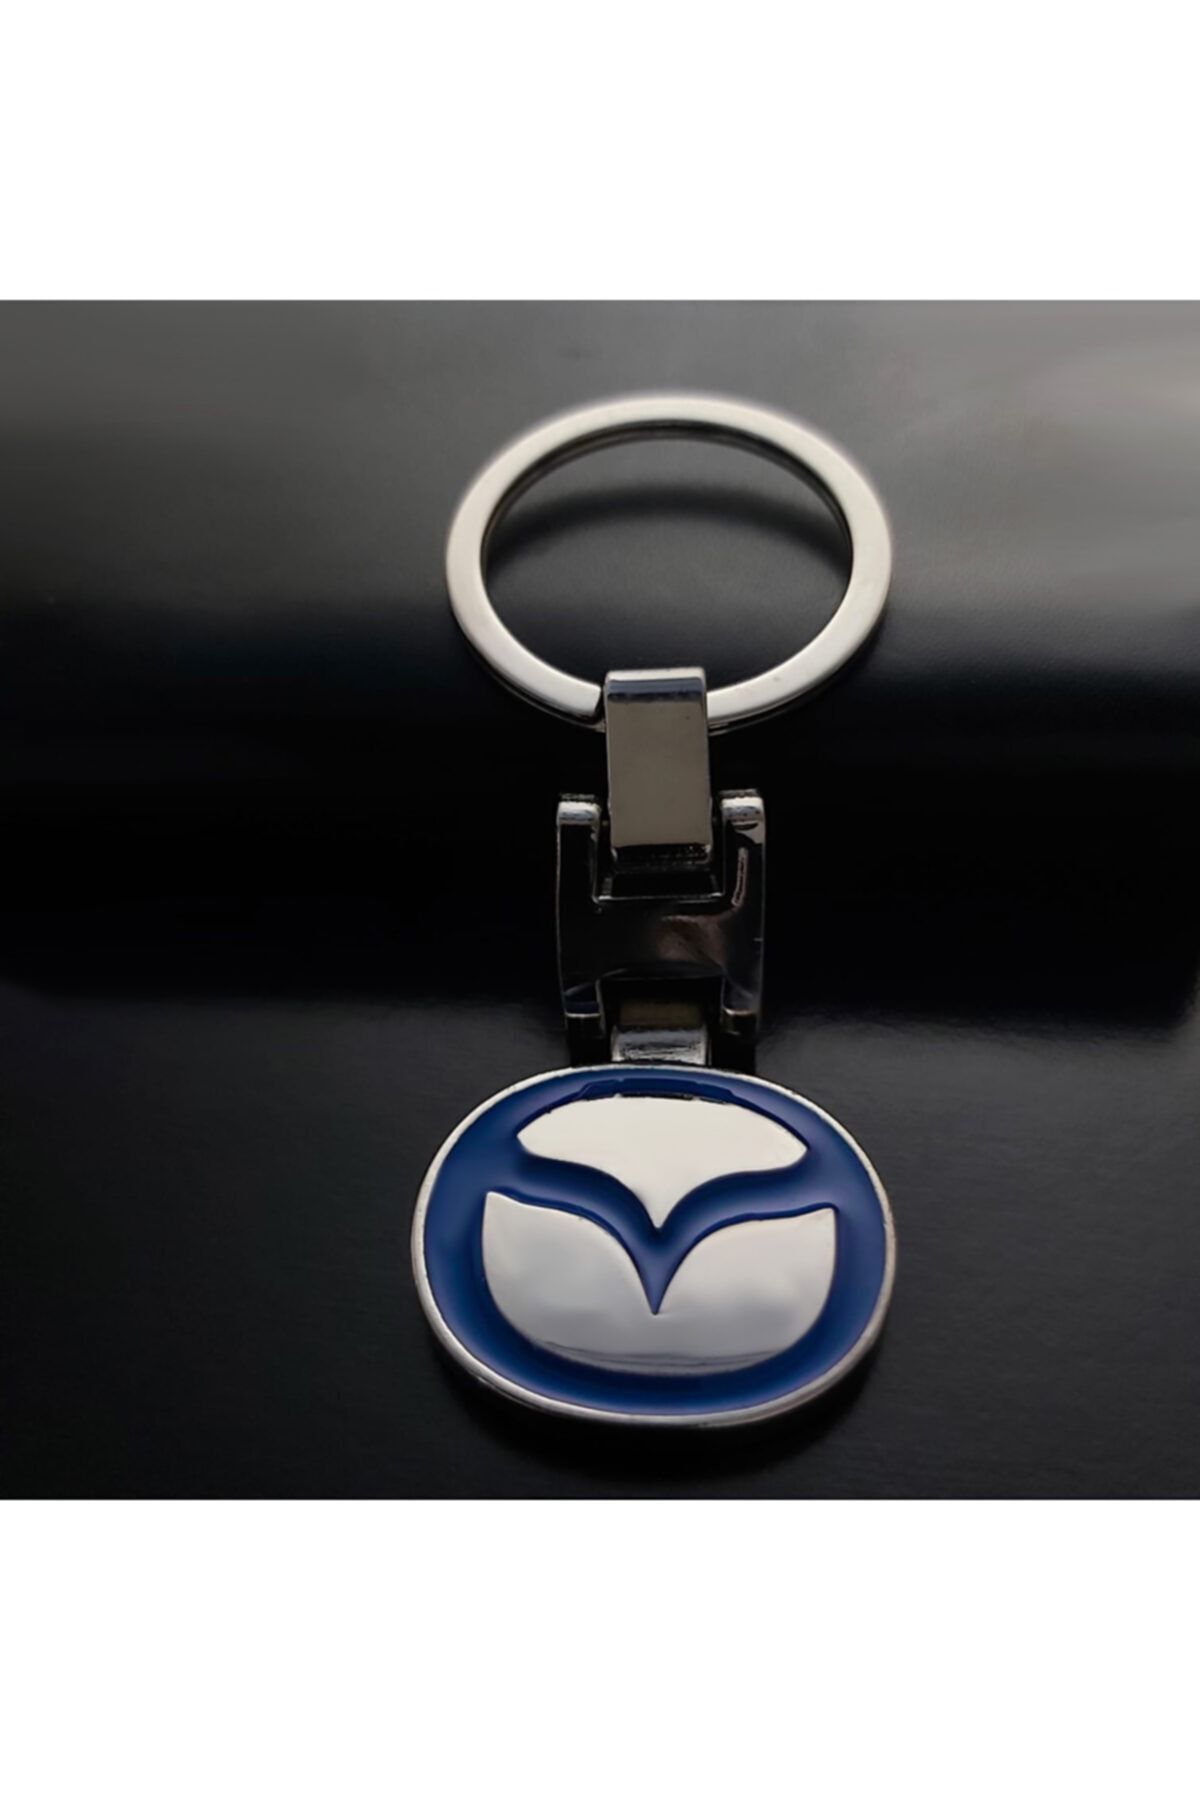 CARMANİAKS Mazda Araca Özel Metal Çift Yönlü Anahtarlık